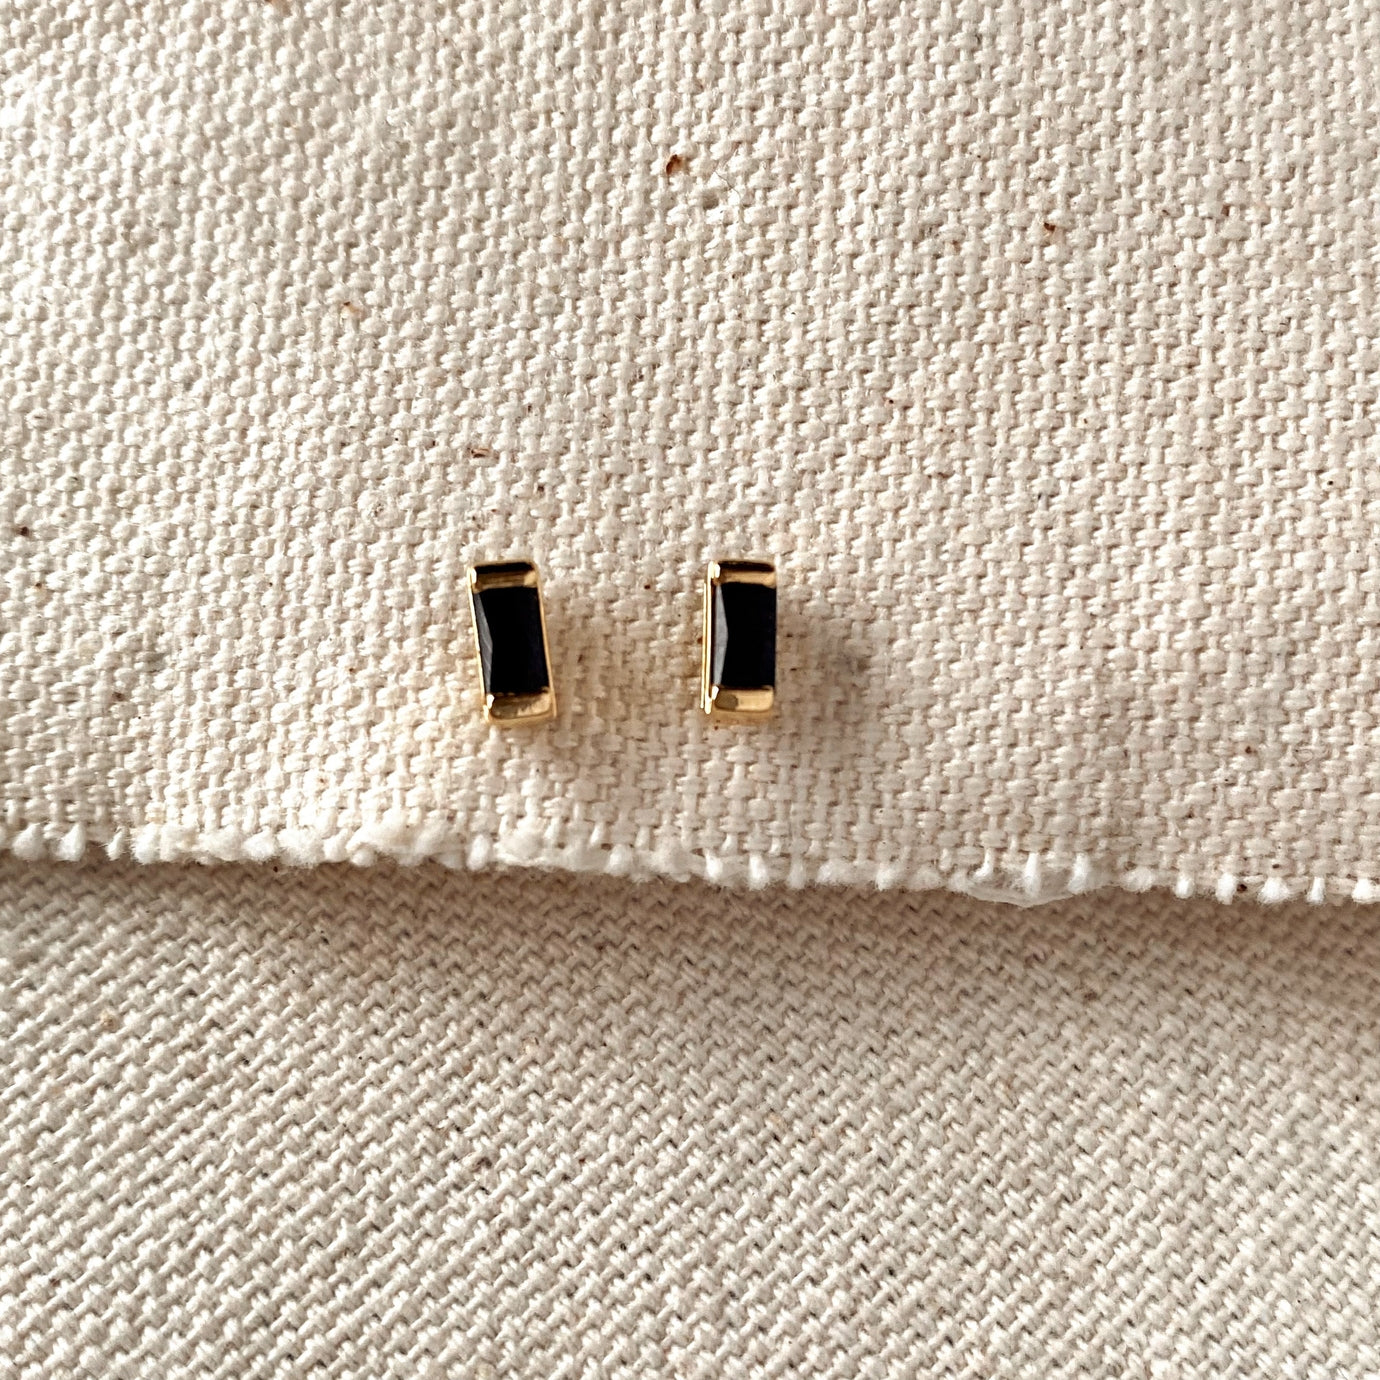 Black CZ Baguette Earrings, 18k Gold Filled